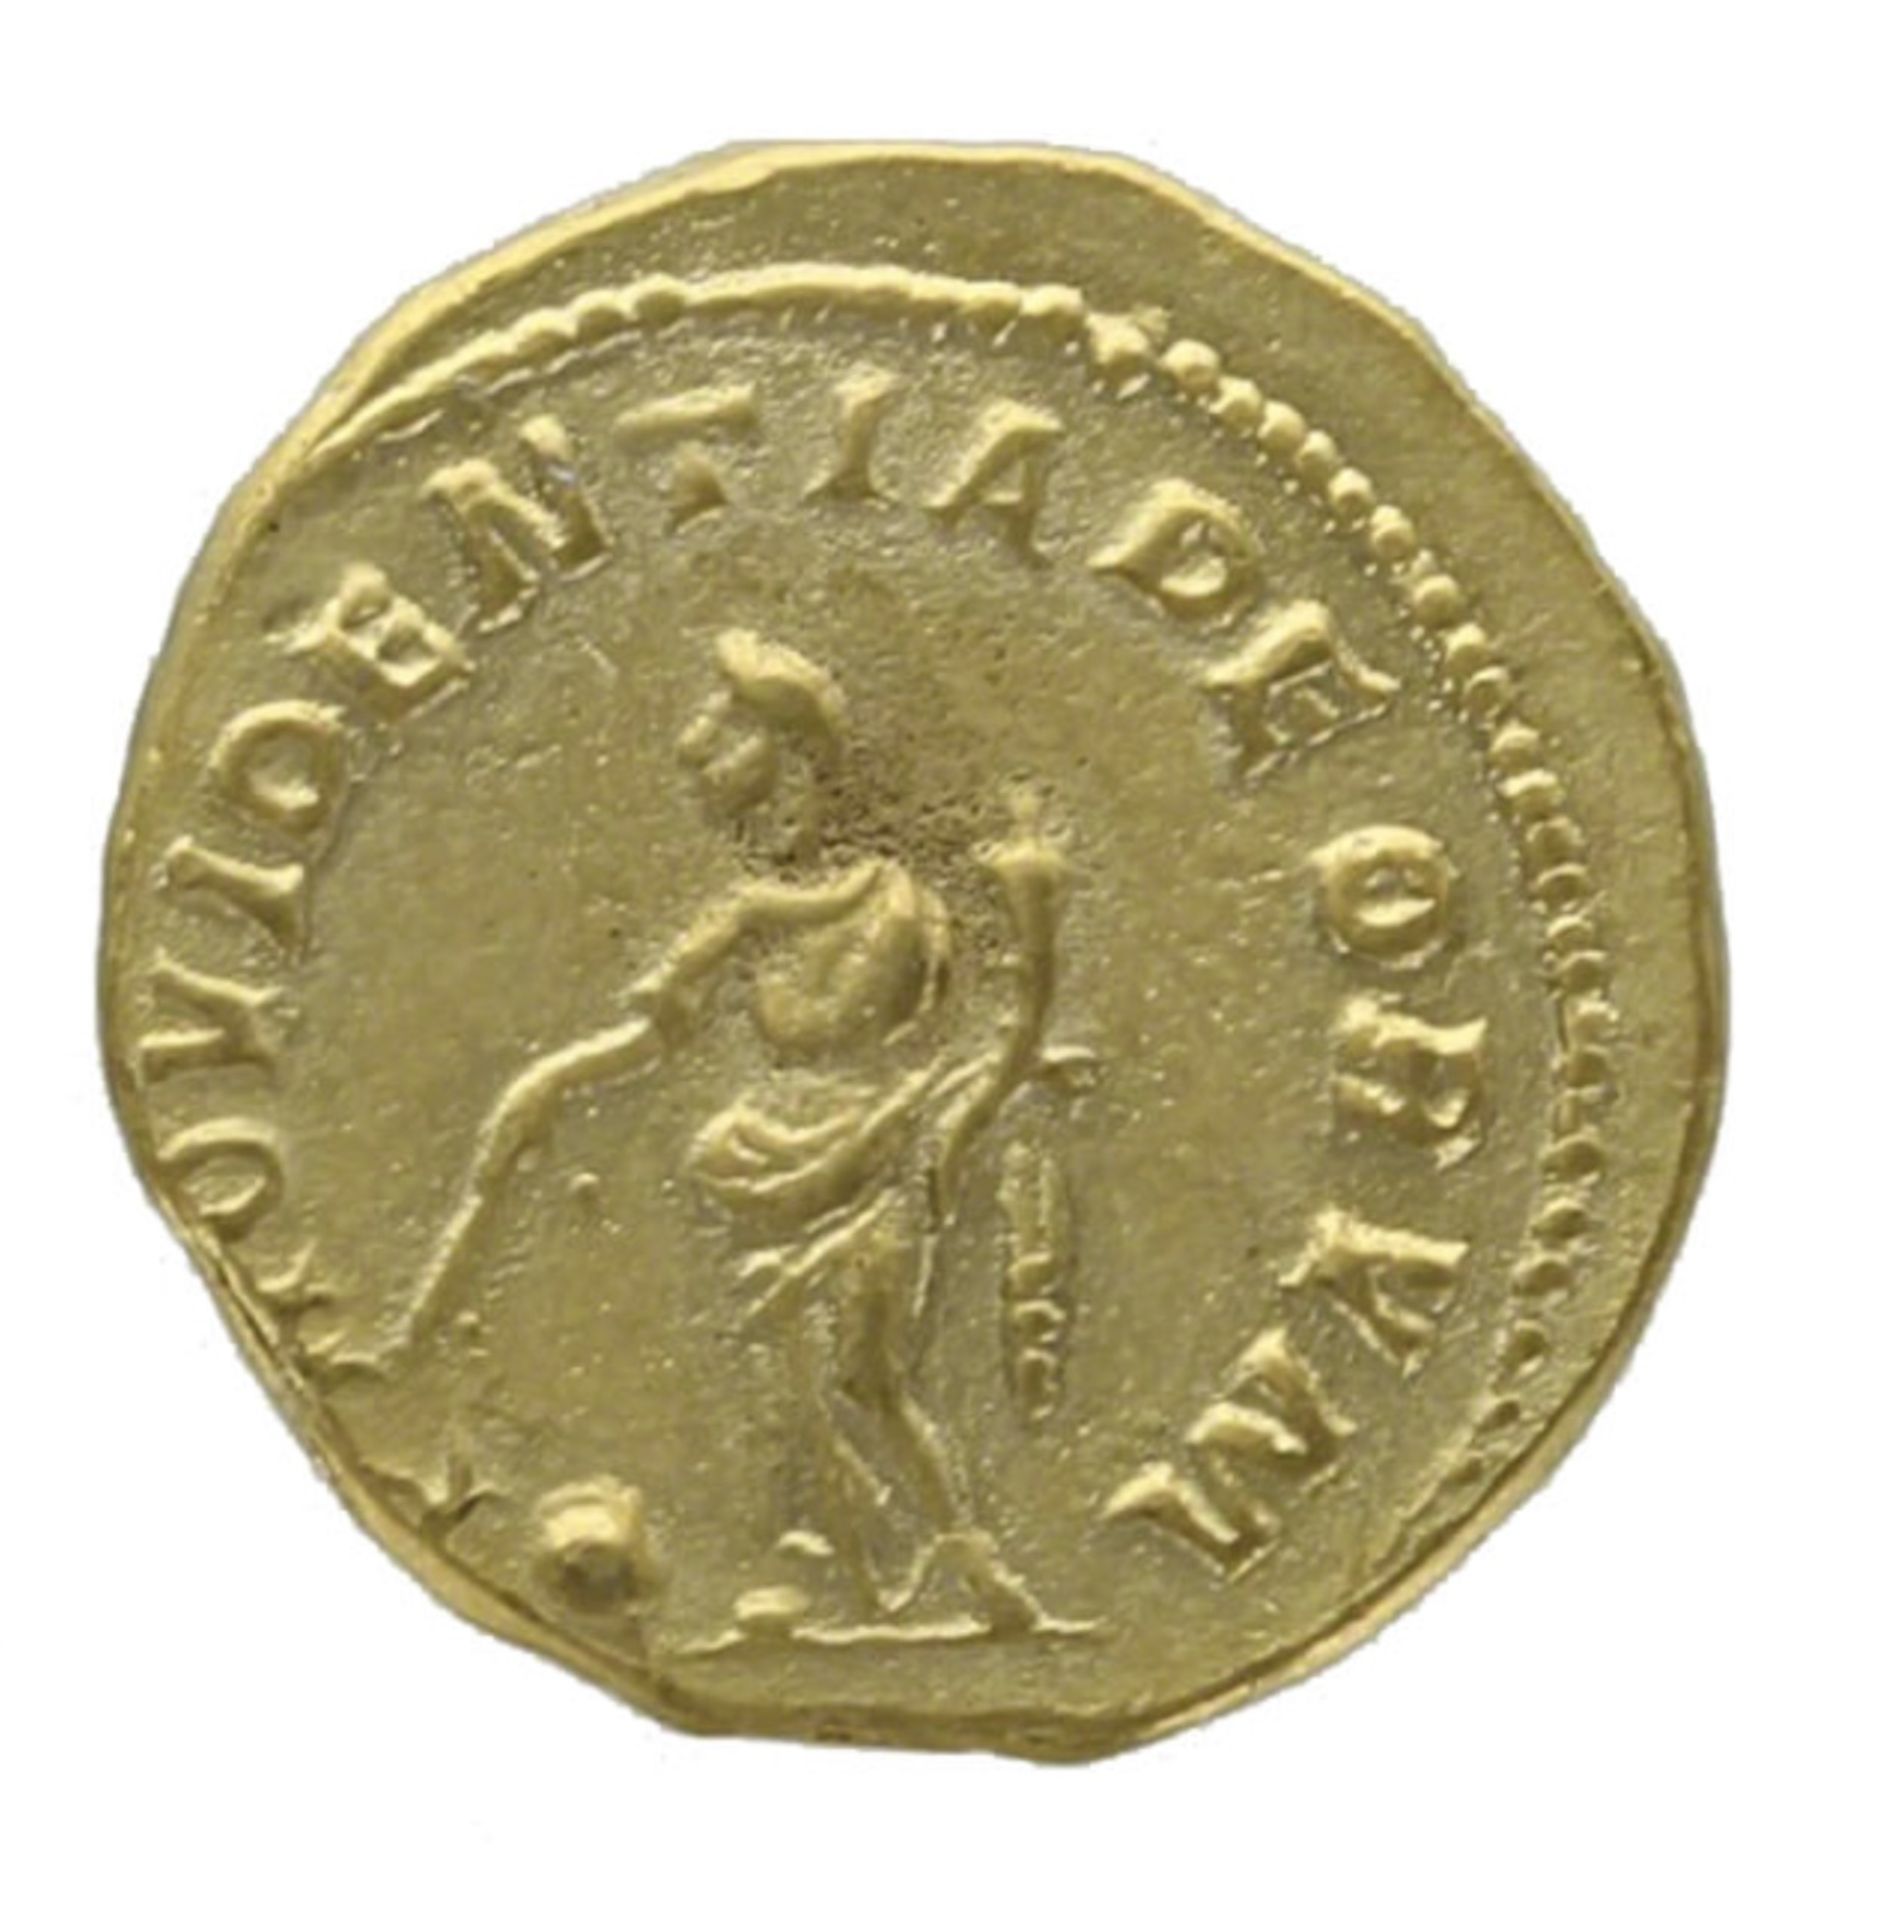 Roman Emperor Balbinus Gold Aureus Coin - Image 2 of 2